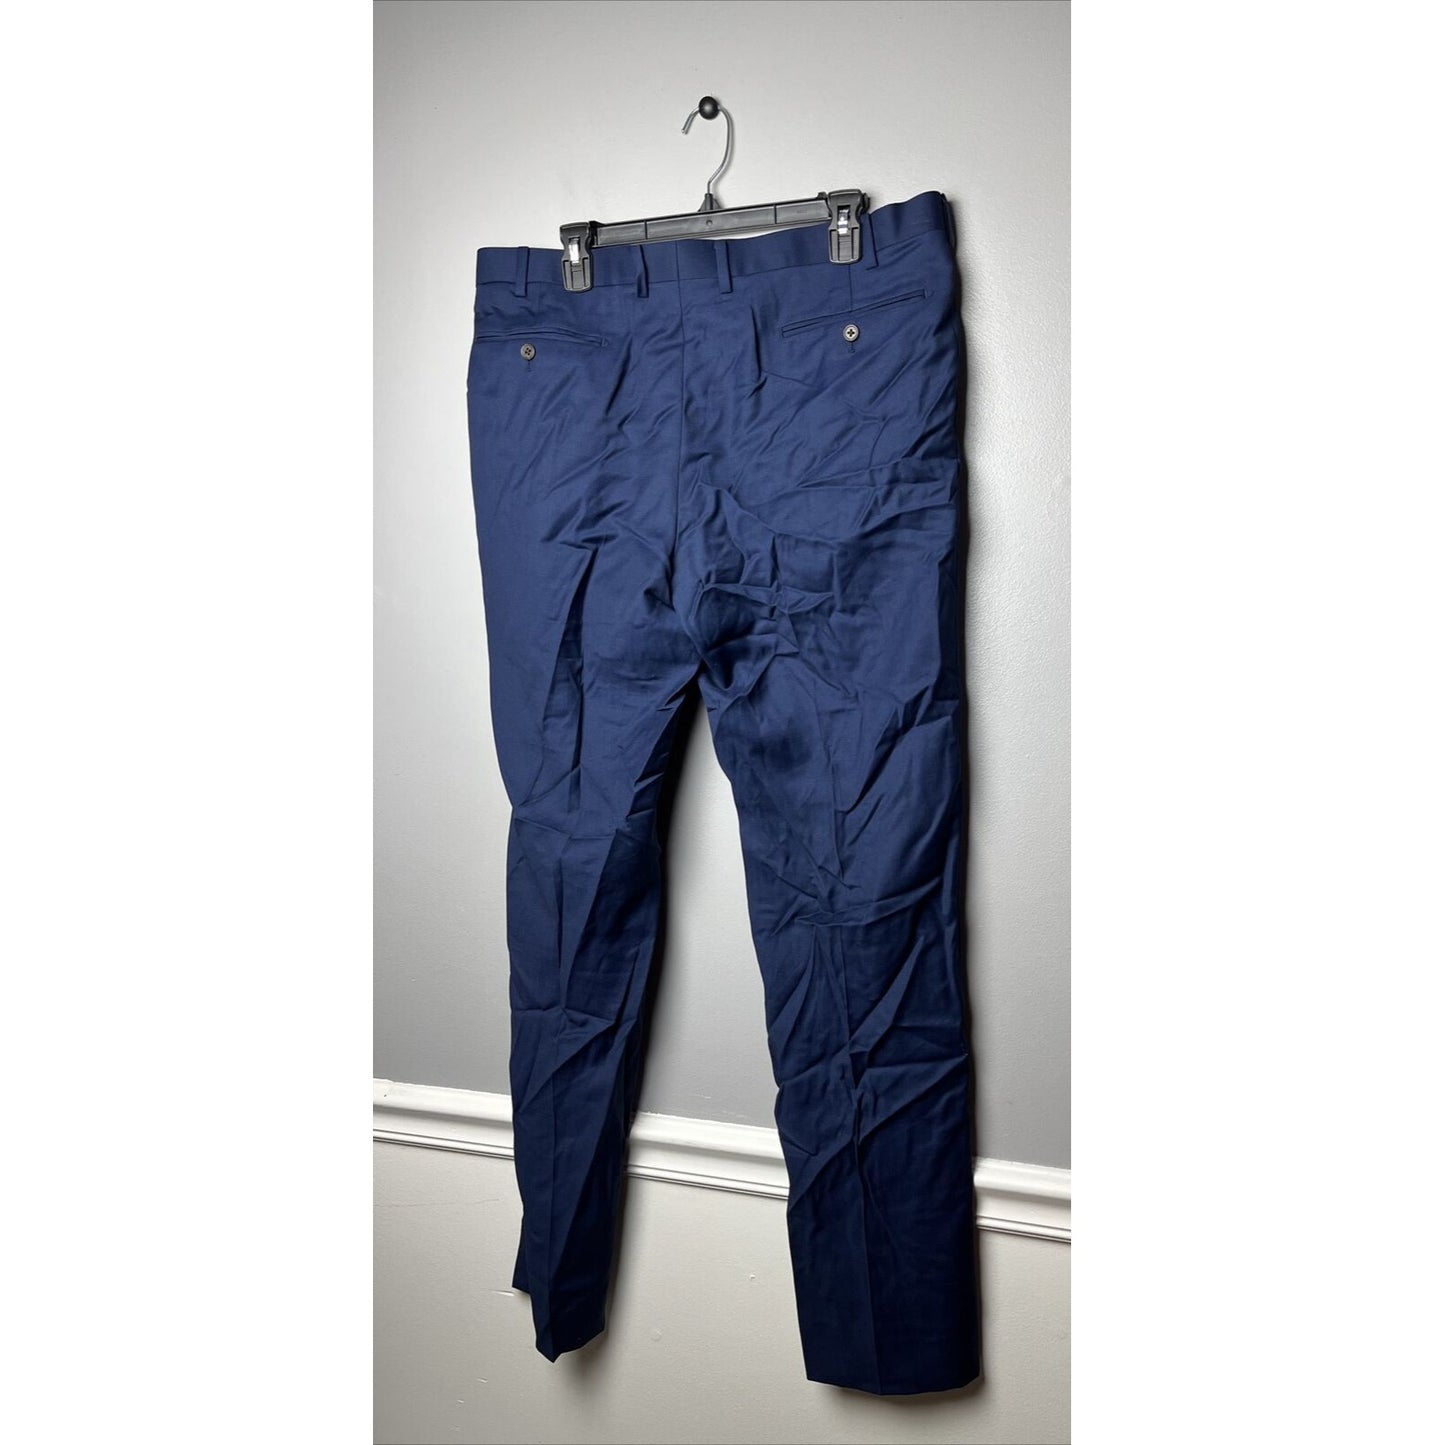 NEW Alton Lane Men's Medium Blue Tailored Fit Mercantile Chino Pants - 36 Size